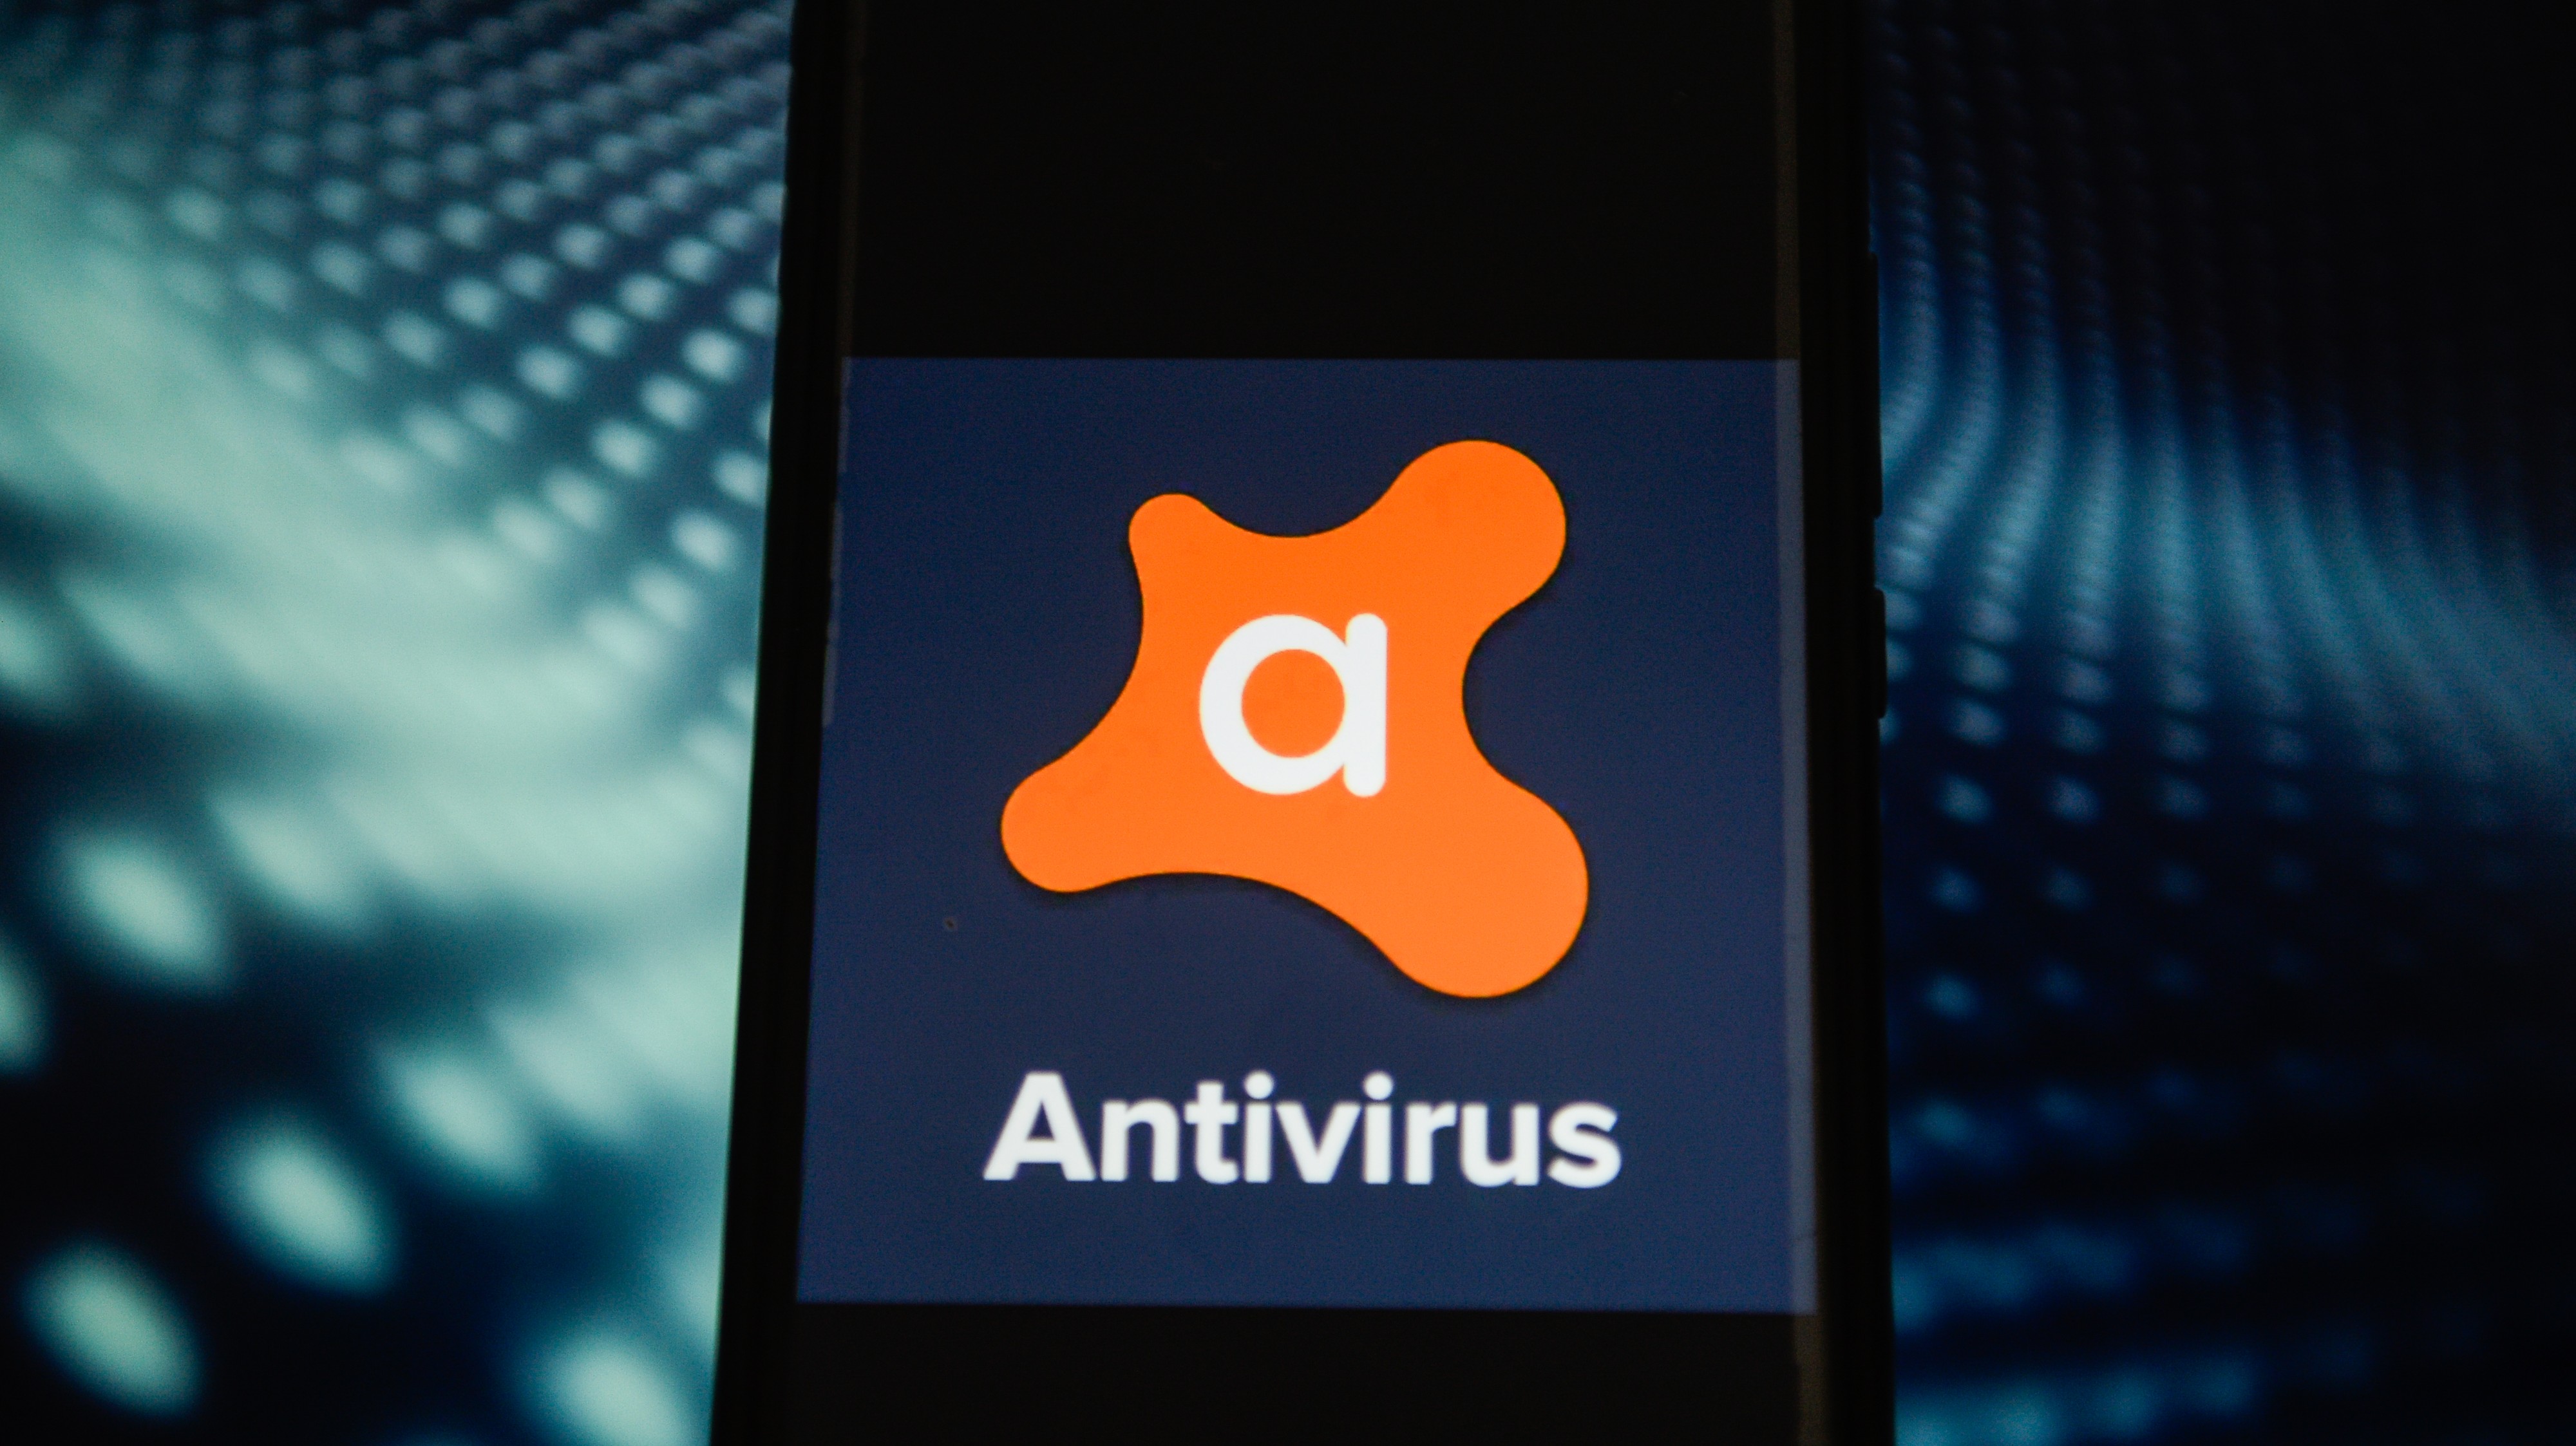 Senator Wyden Asks Avast Antivirus Why It Sells Users Browsing Data